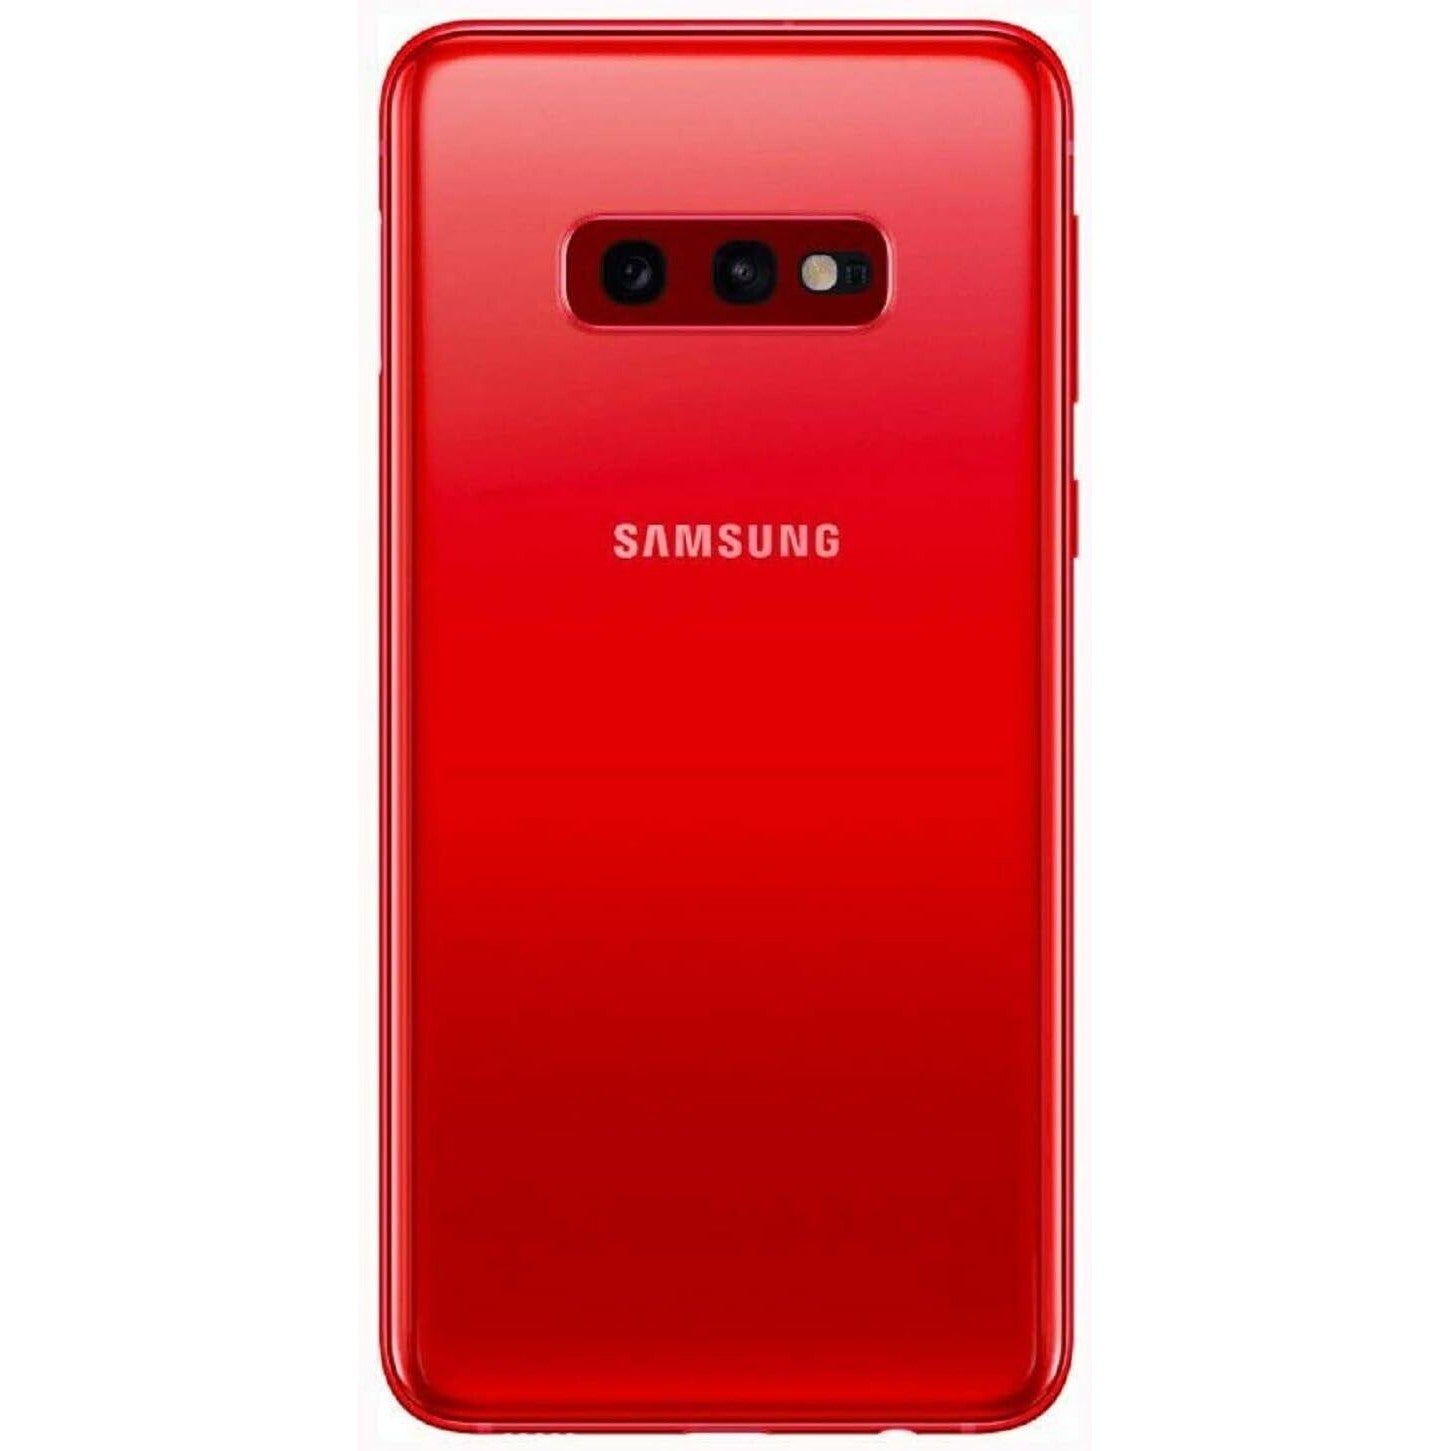 Samsung Galaxy S10e Unlocked 128GB/256GB All Colours - Fair Condition